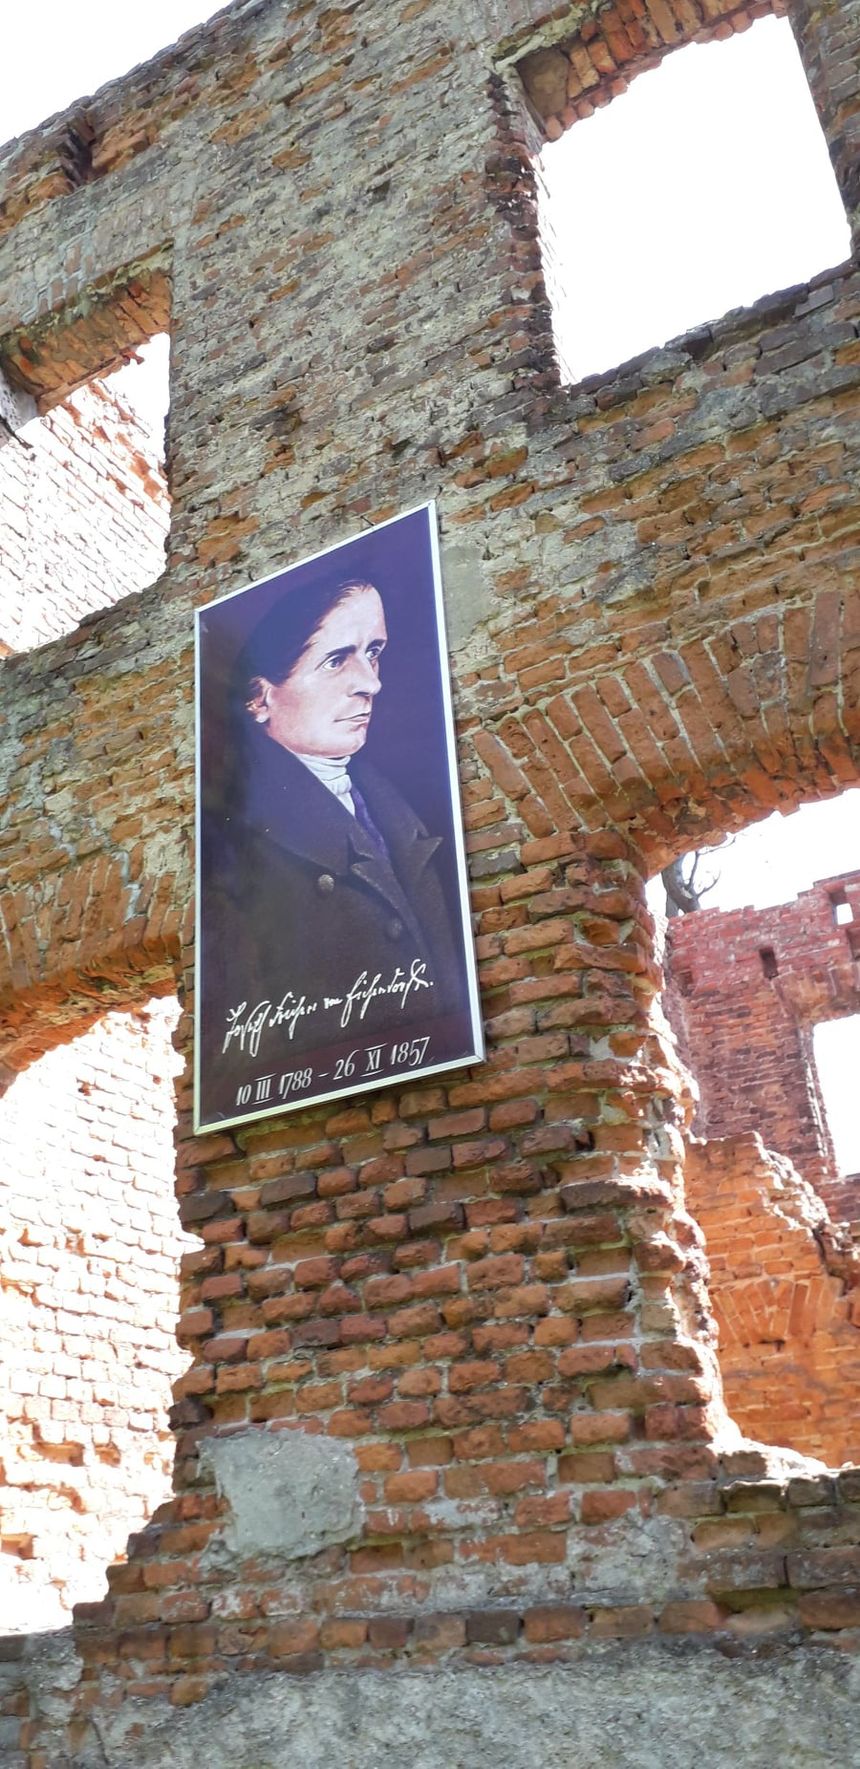 Portret Eichendorffa na ruinach pałacu w Łubowicach.